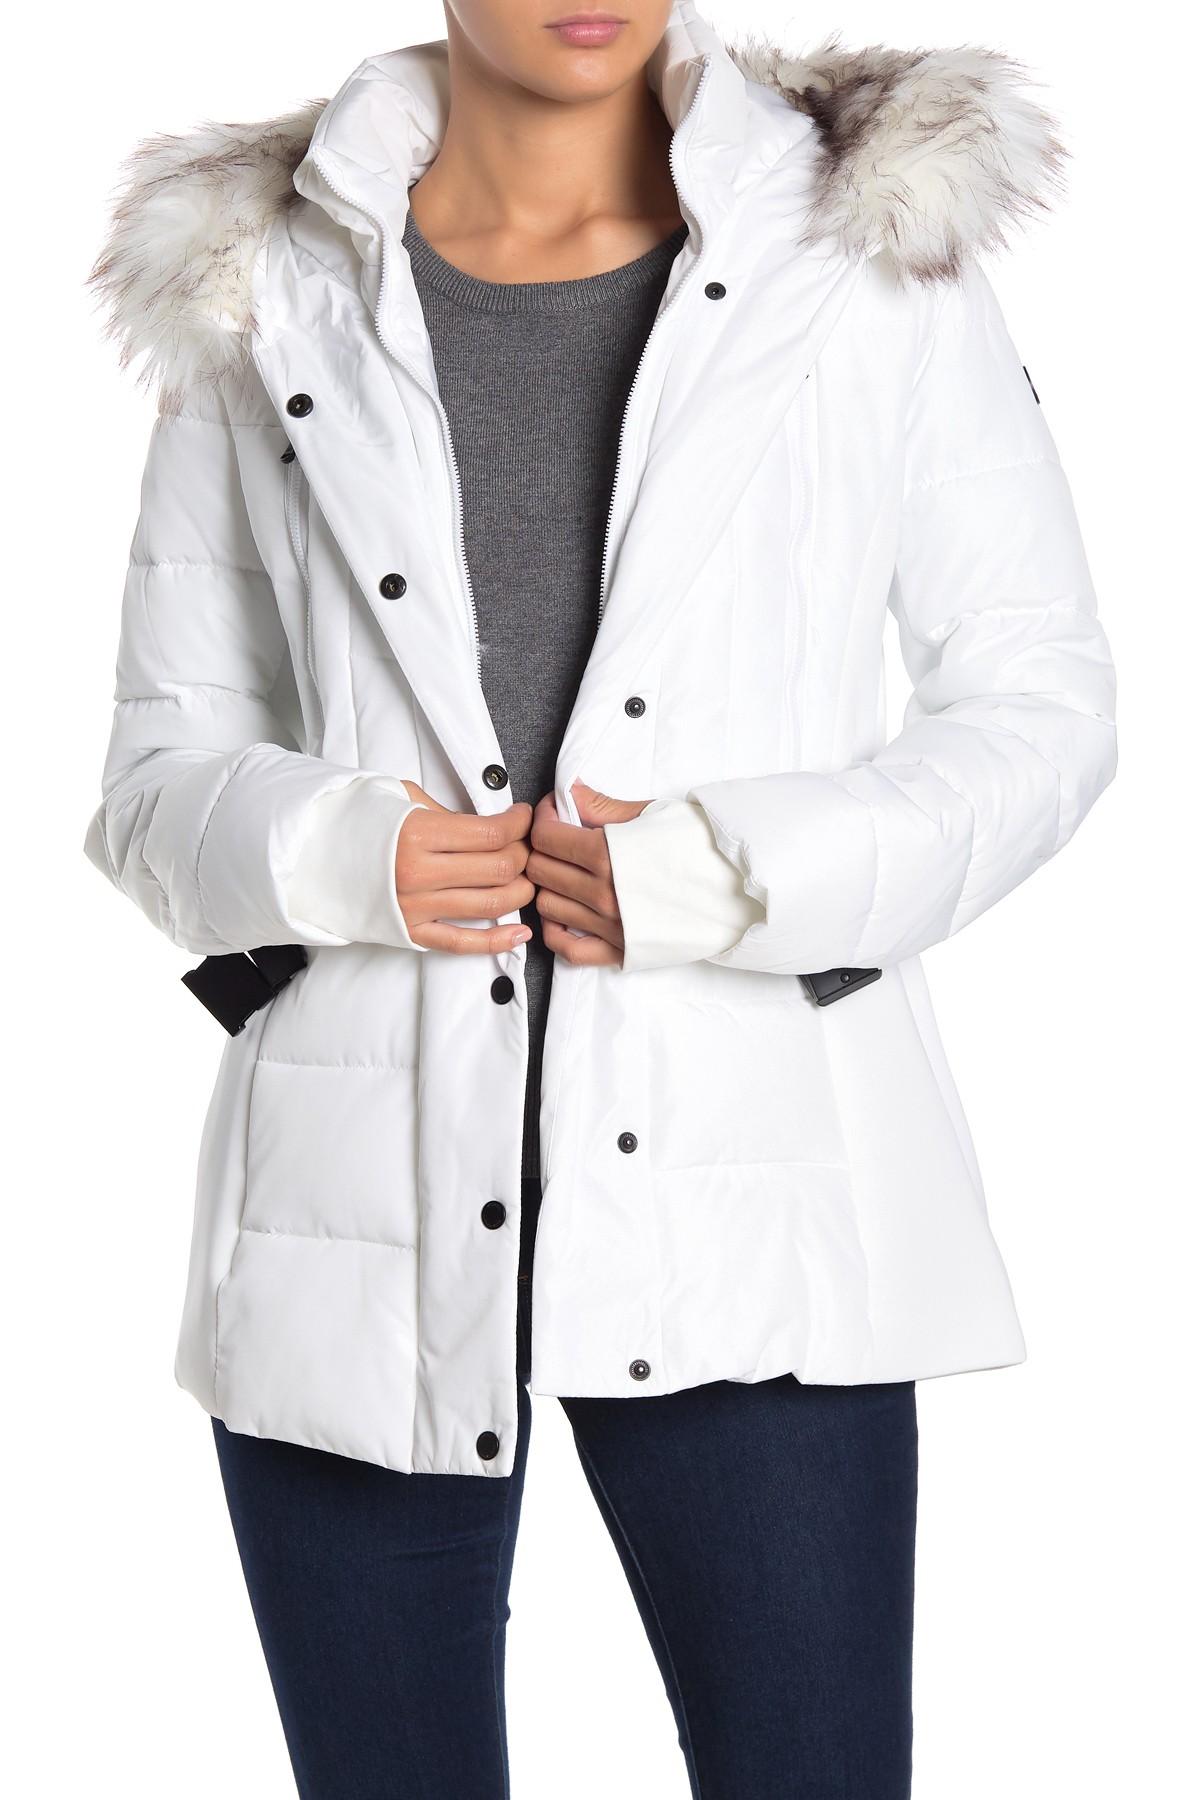 michael kors white jacket